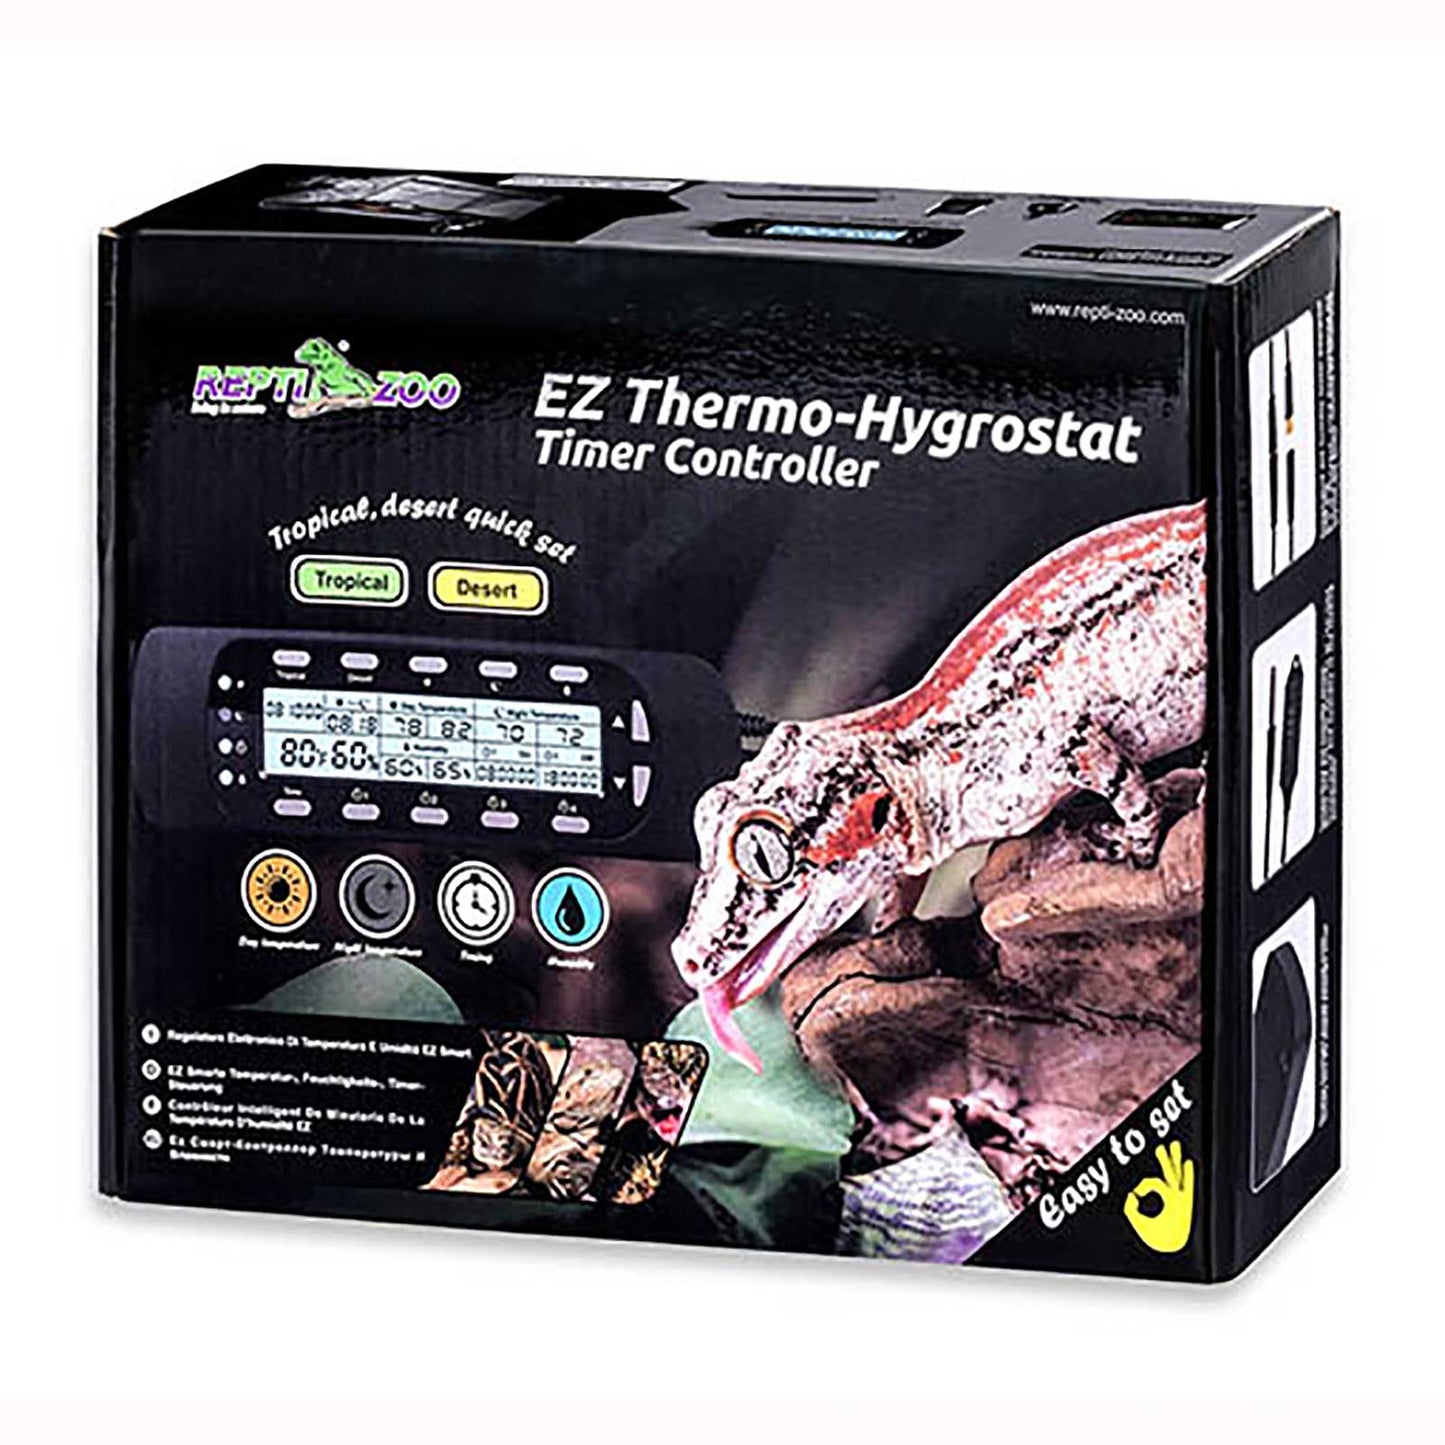 Reptile EZ Thermo-Hygrostat Timer Controller Bulk Buy x6